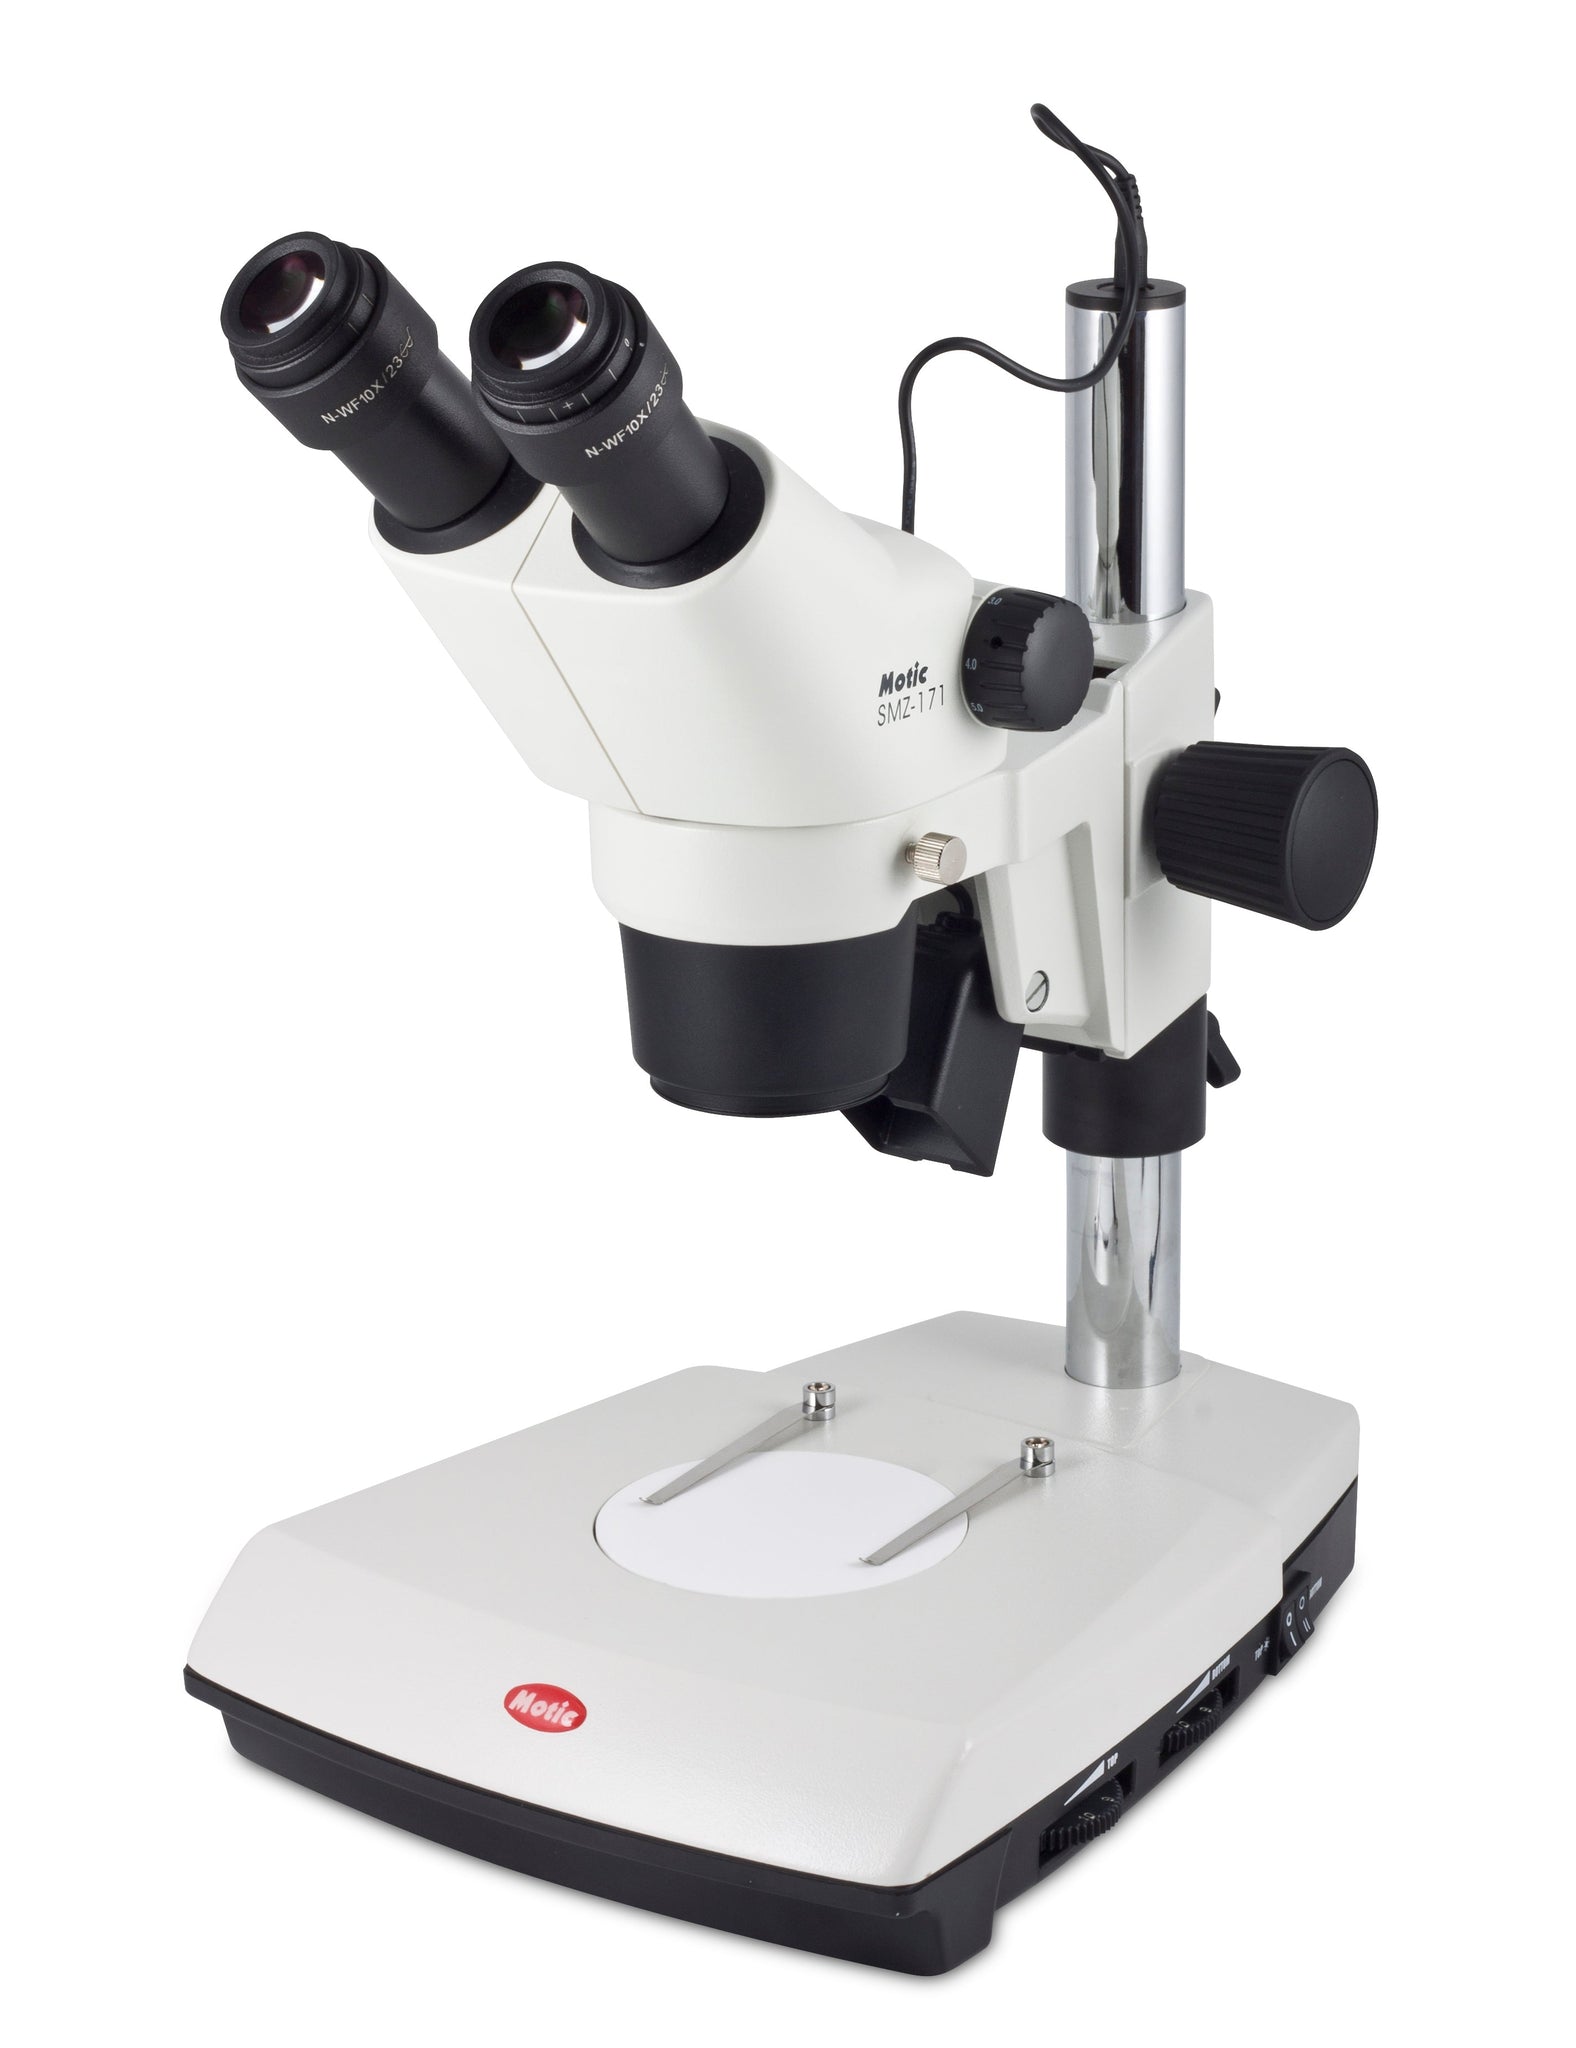 Motic SMZ-171-LED Microscope Series 7.5x - 50x Zoom